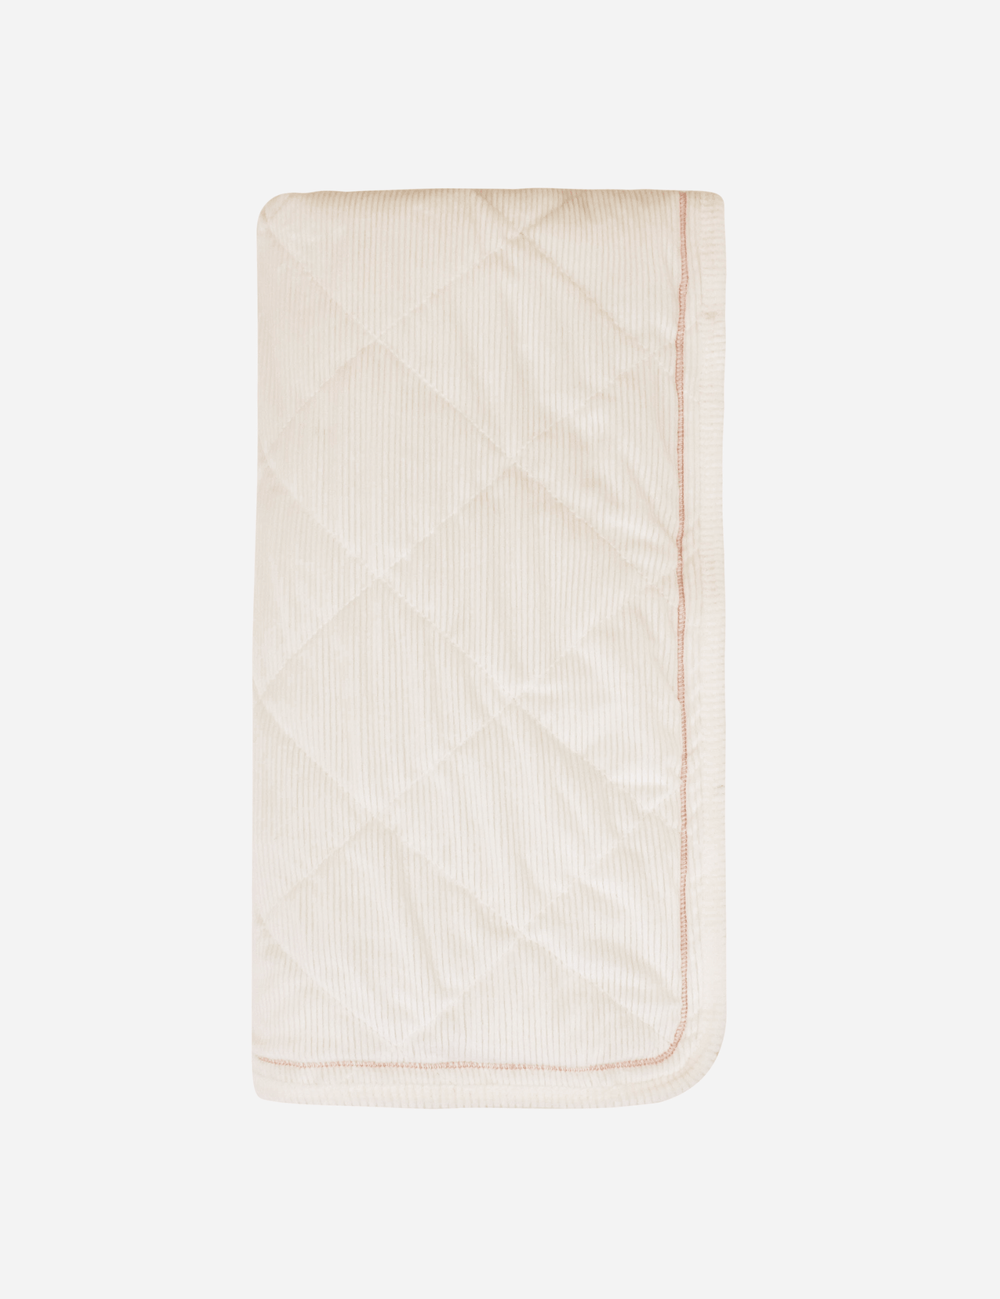 Ruffle Collar Blanket - White